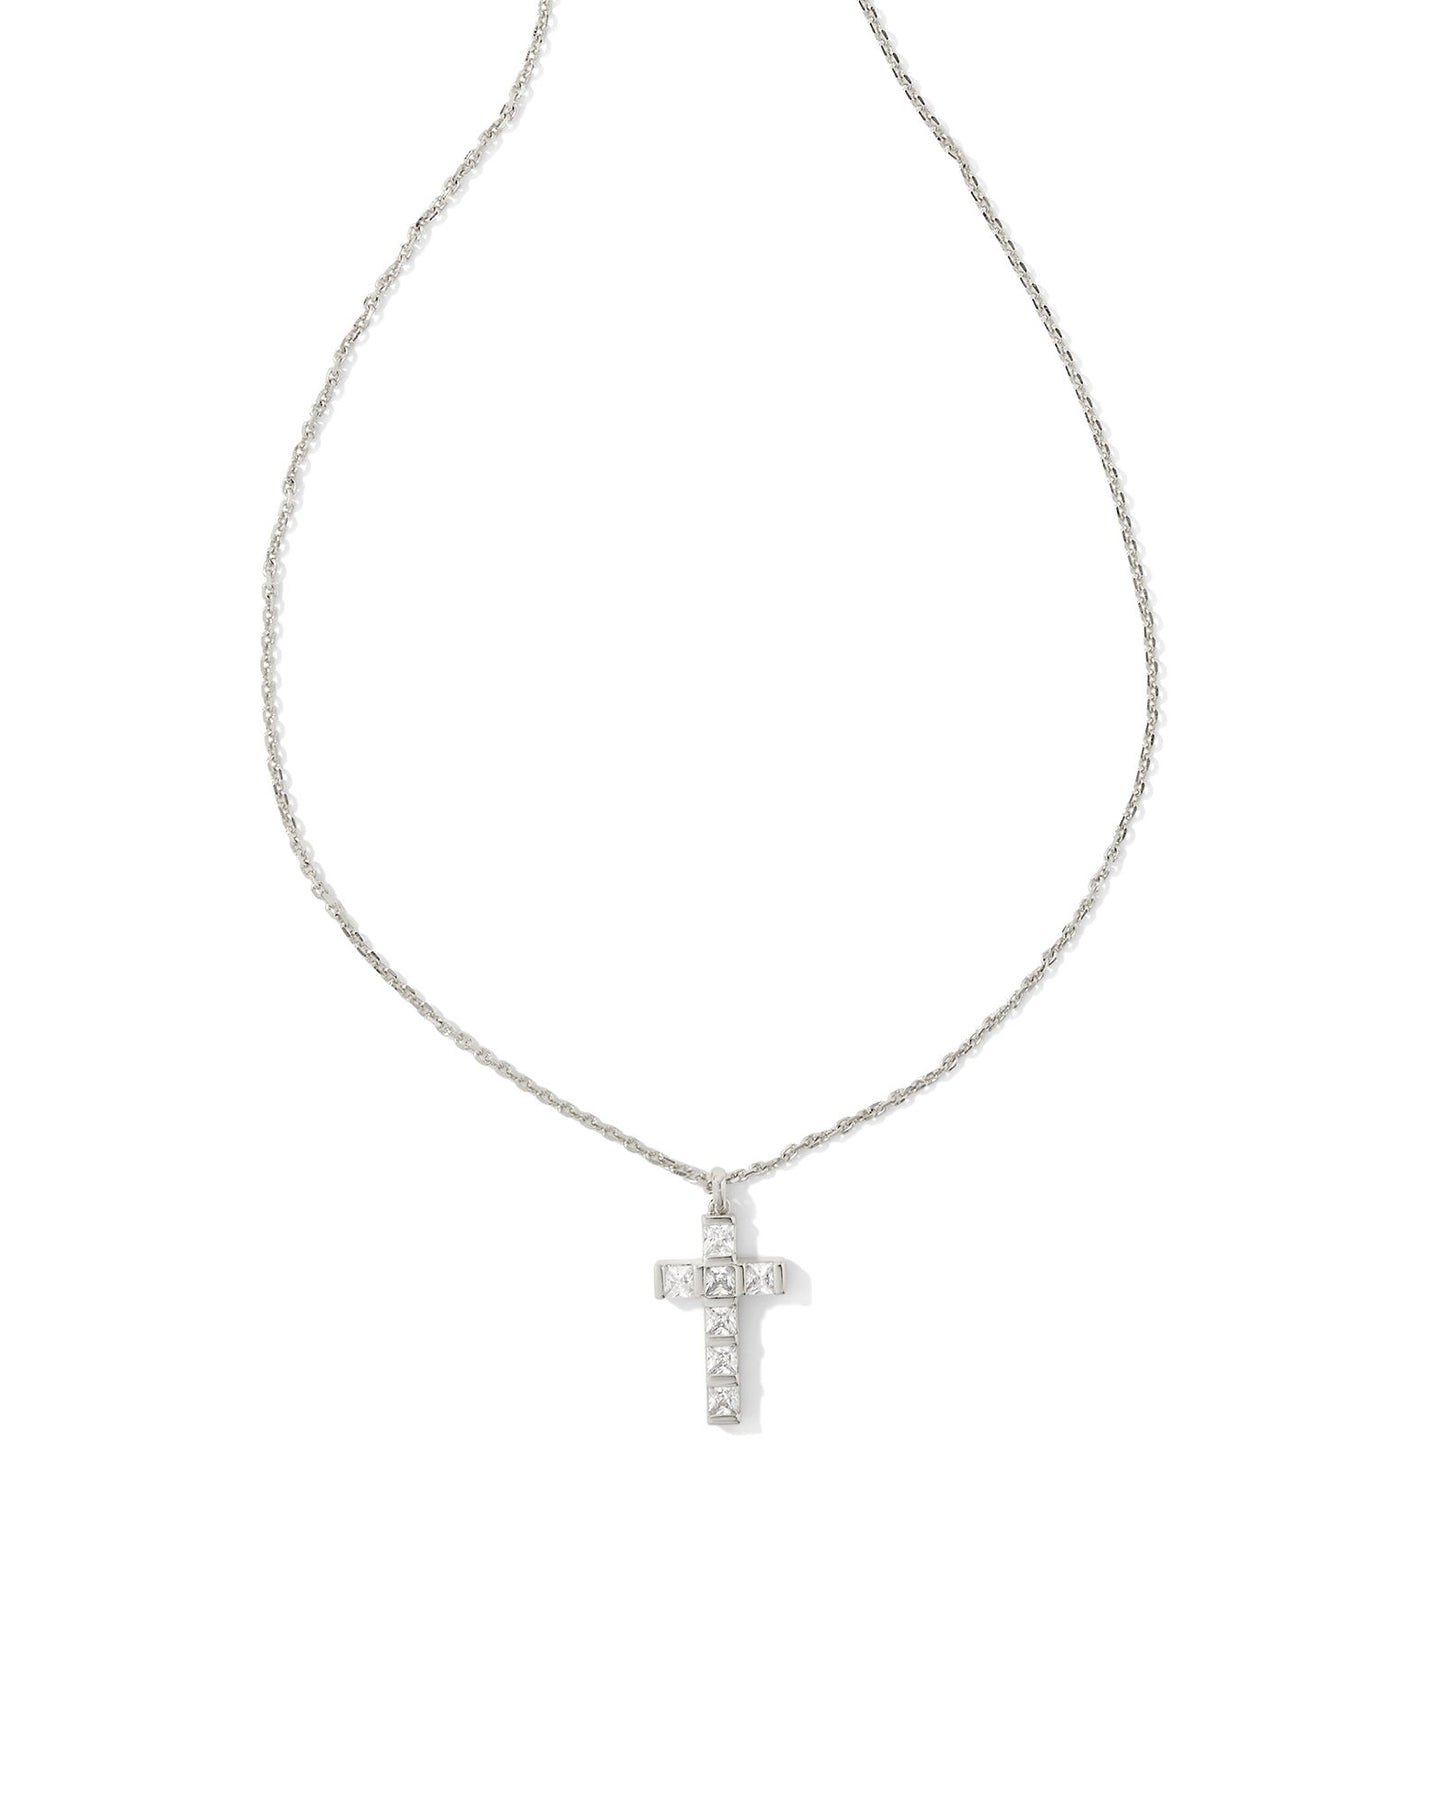 Gracie Gold Cross Short Pendant Necklace - Brazos Avenue Market 